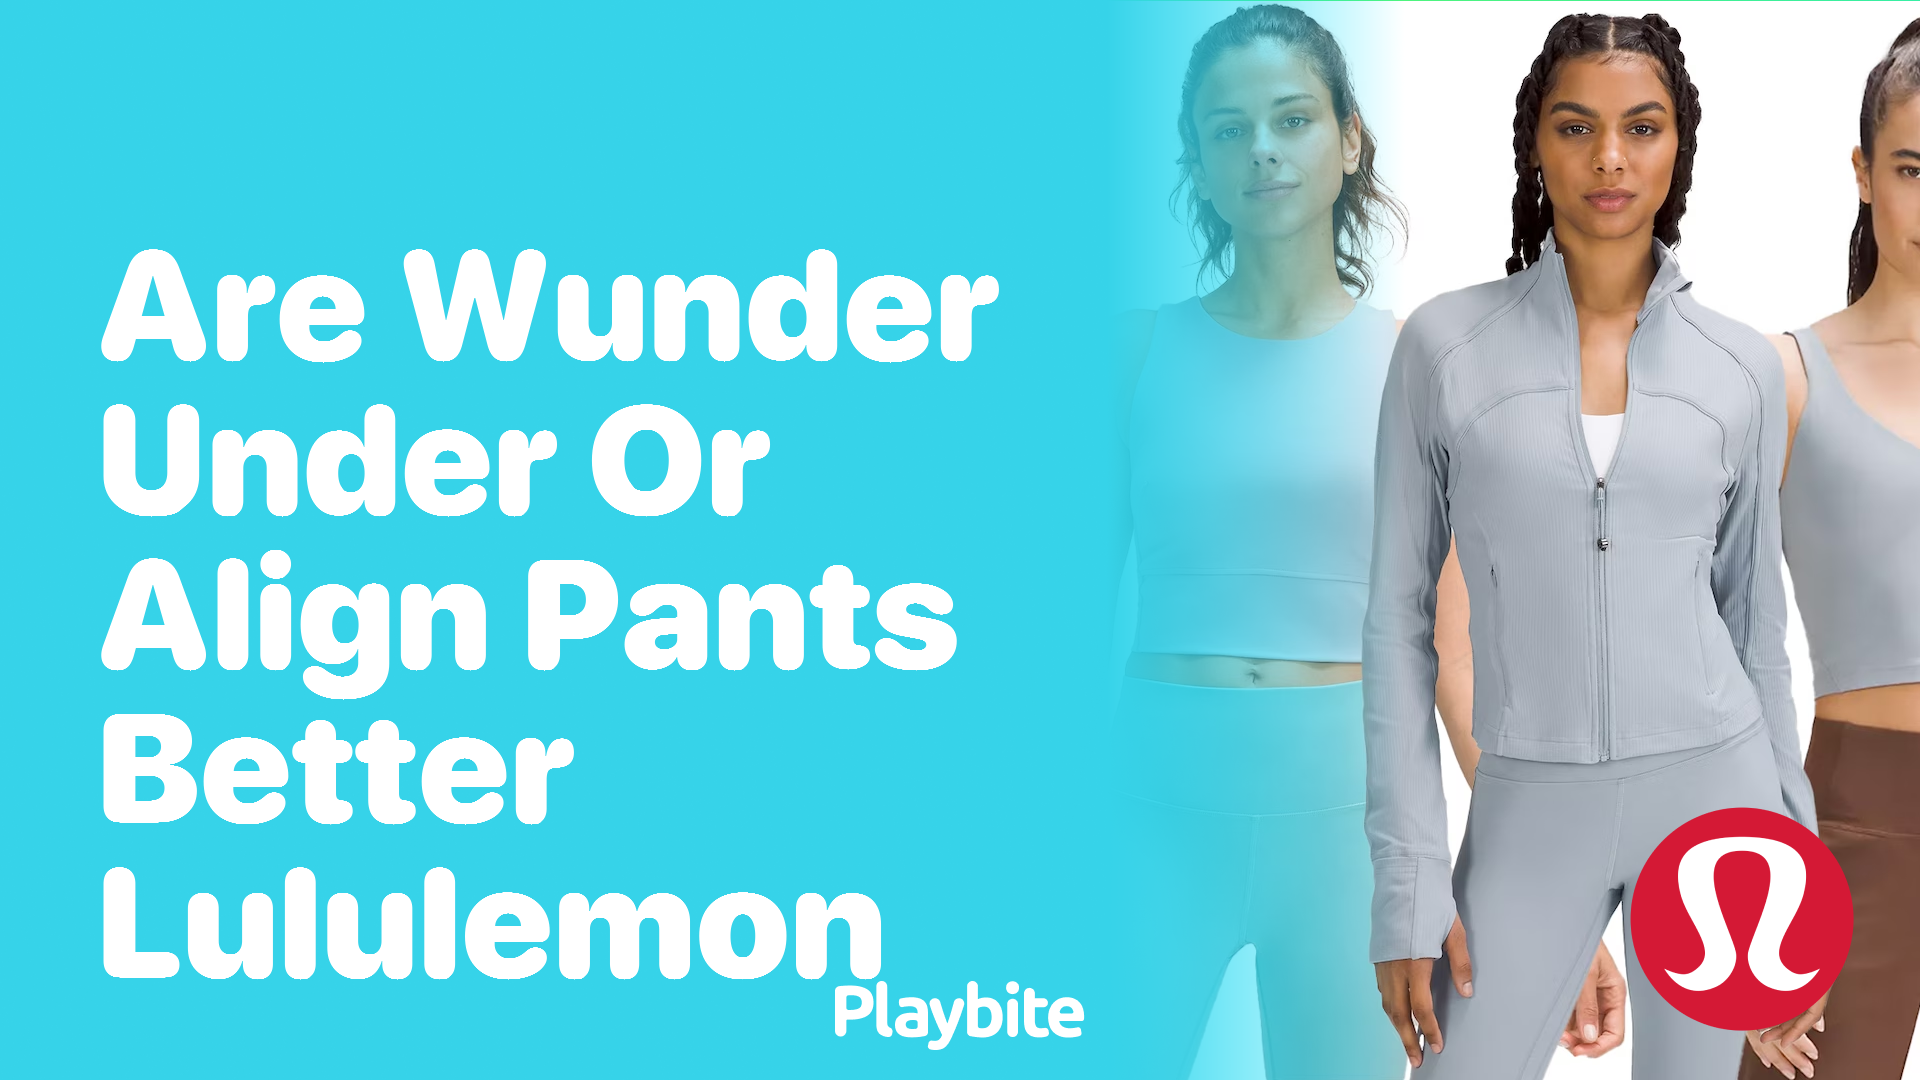 Are Wunder Under or Align Pants Better for Your Lululemon Wardrobe